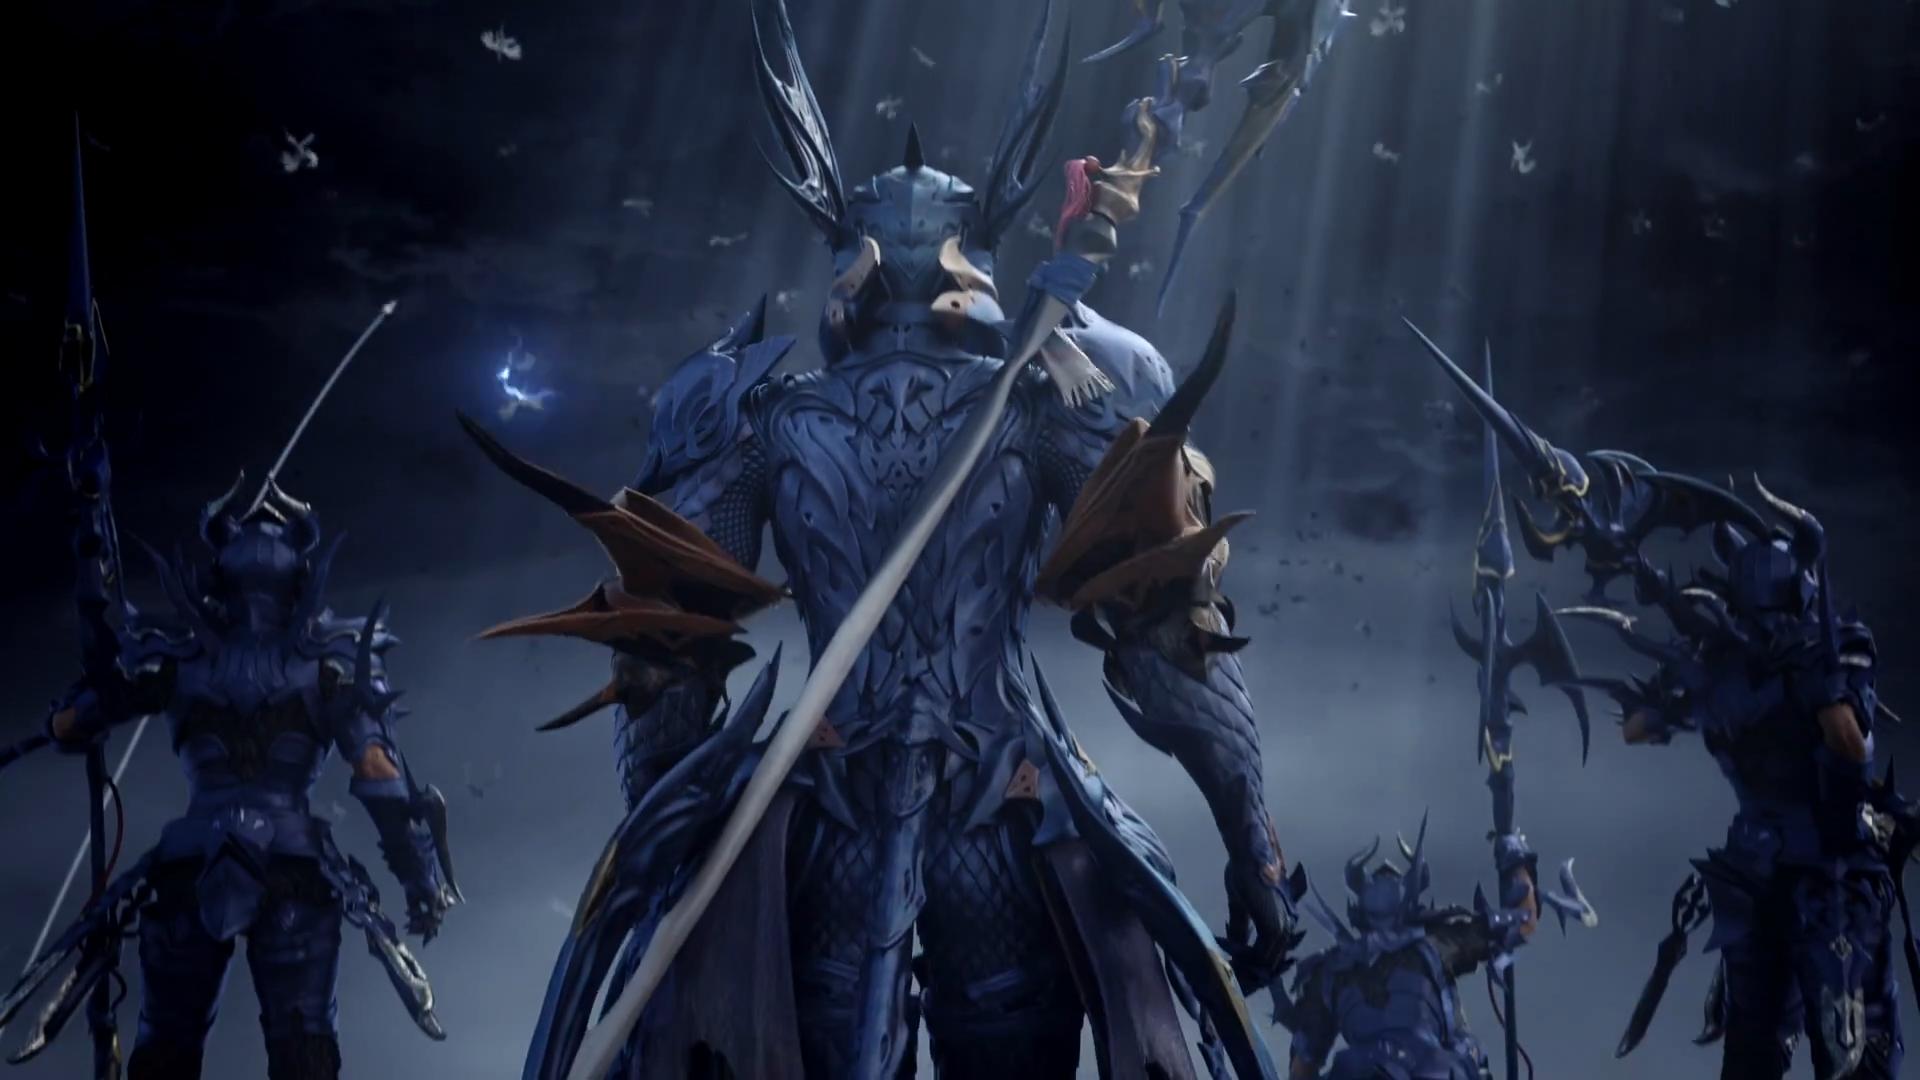 Final Fantasy Xiv Heavensward Announced First Major Expansion Due